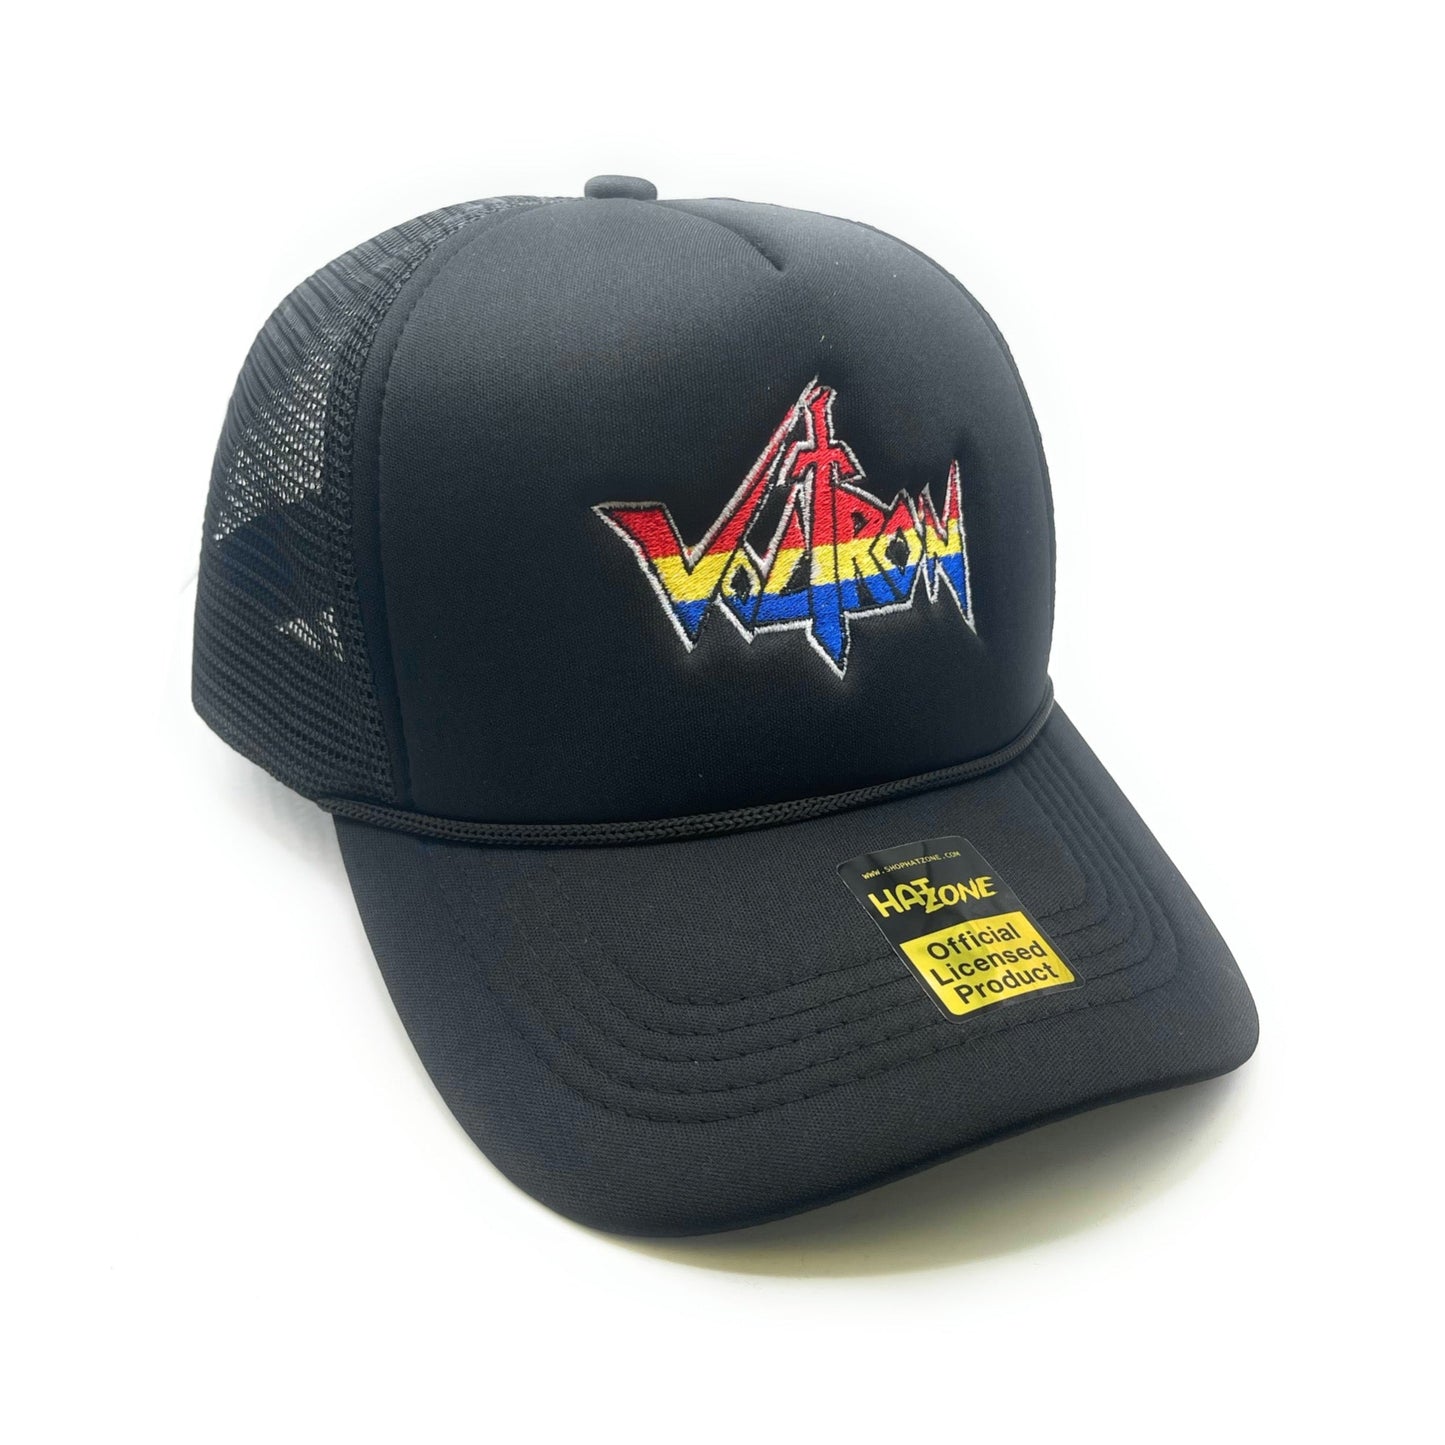 Voltron Mesh Trucker Snapback (Black) - Hat Supreme